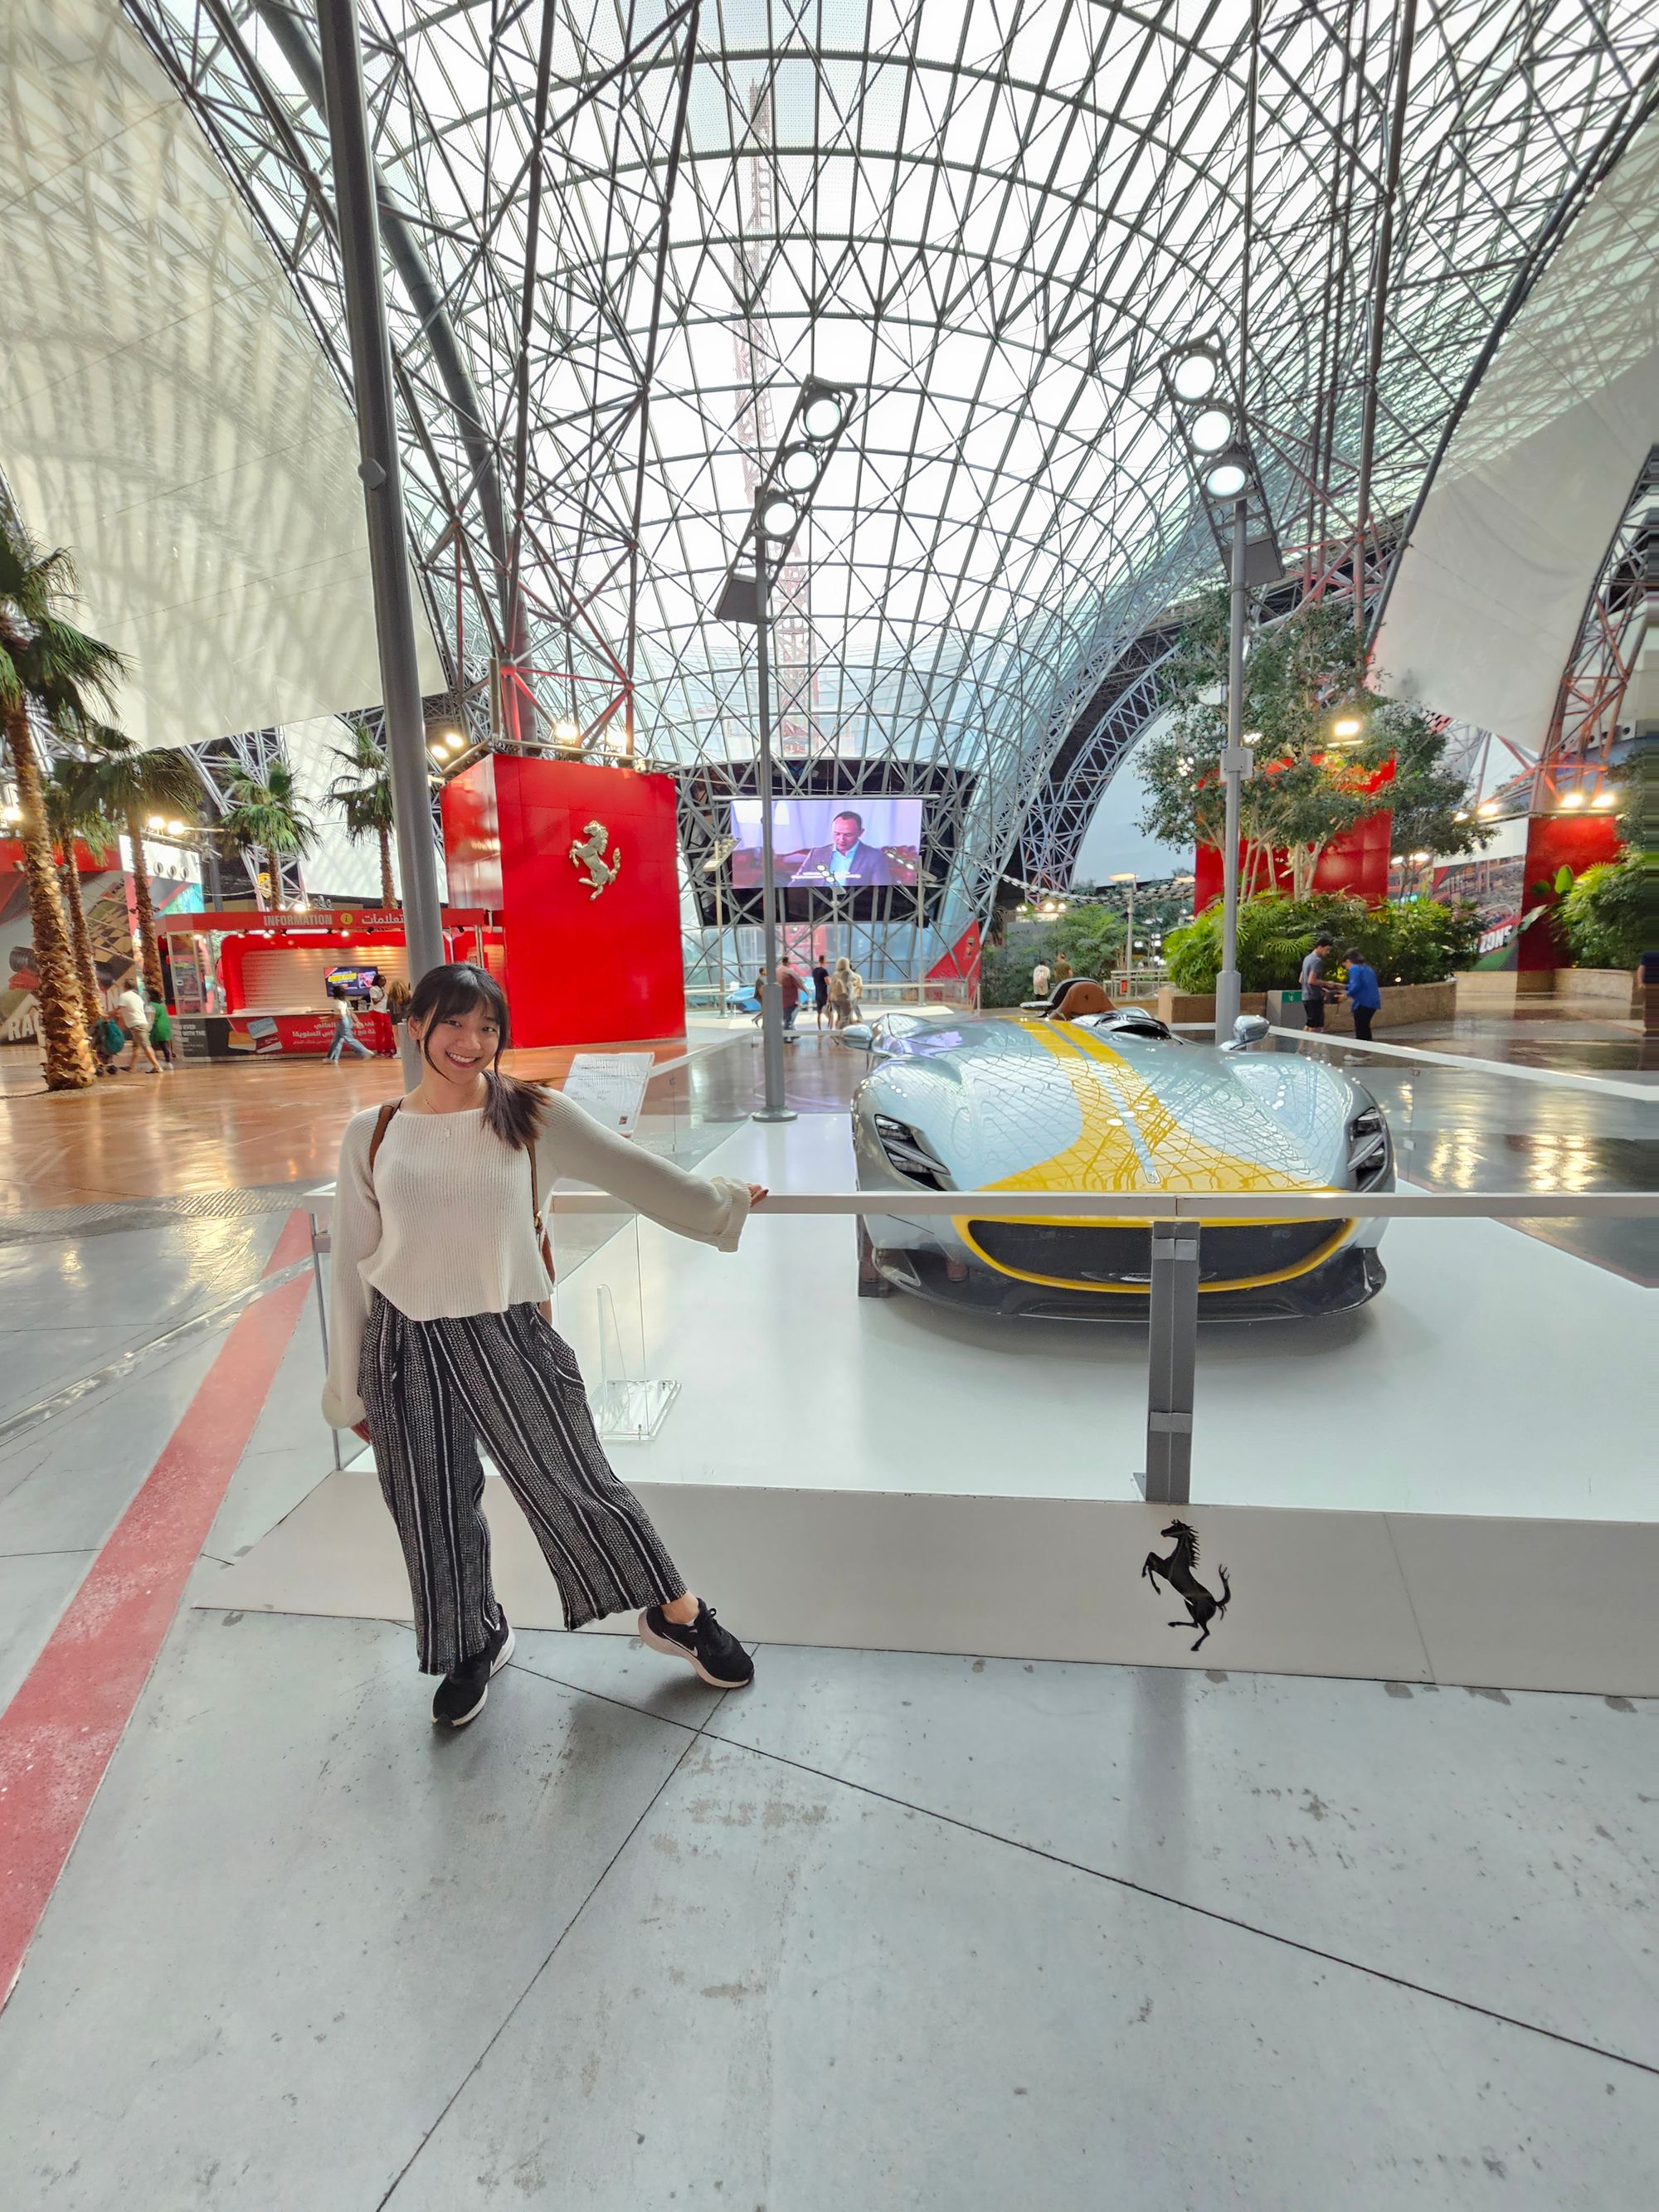 28-Hour Abu Dhabi Layover: Unleash the Thrills of Theme Parks